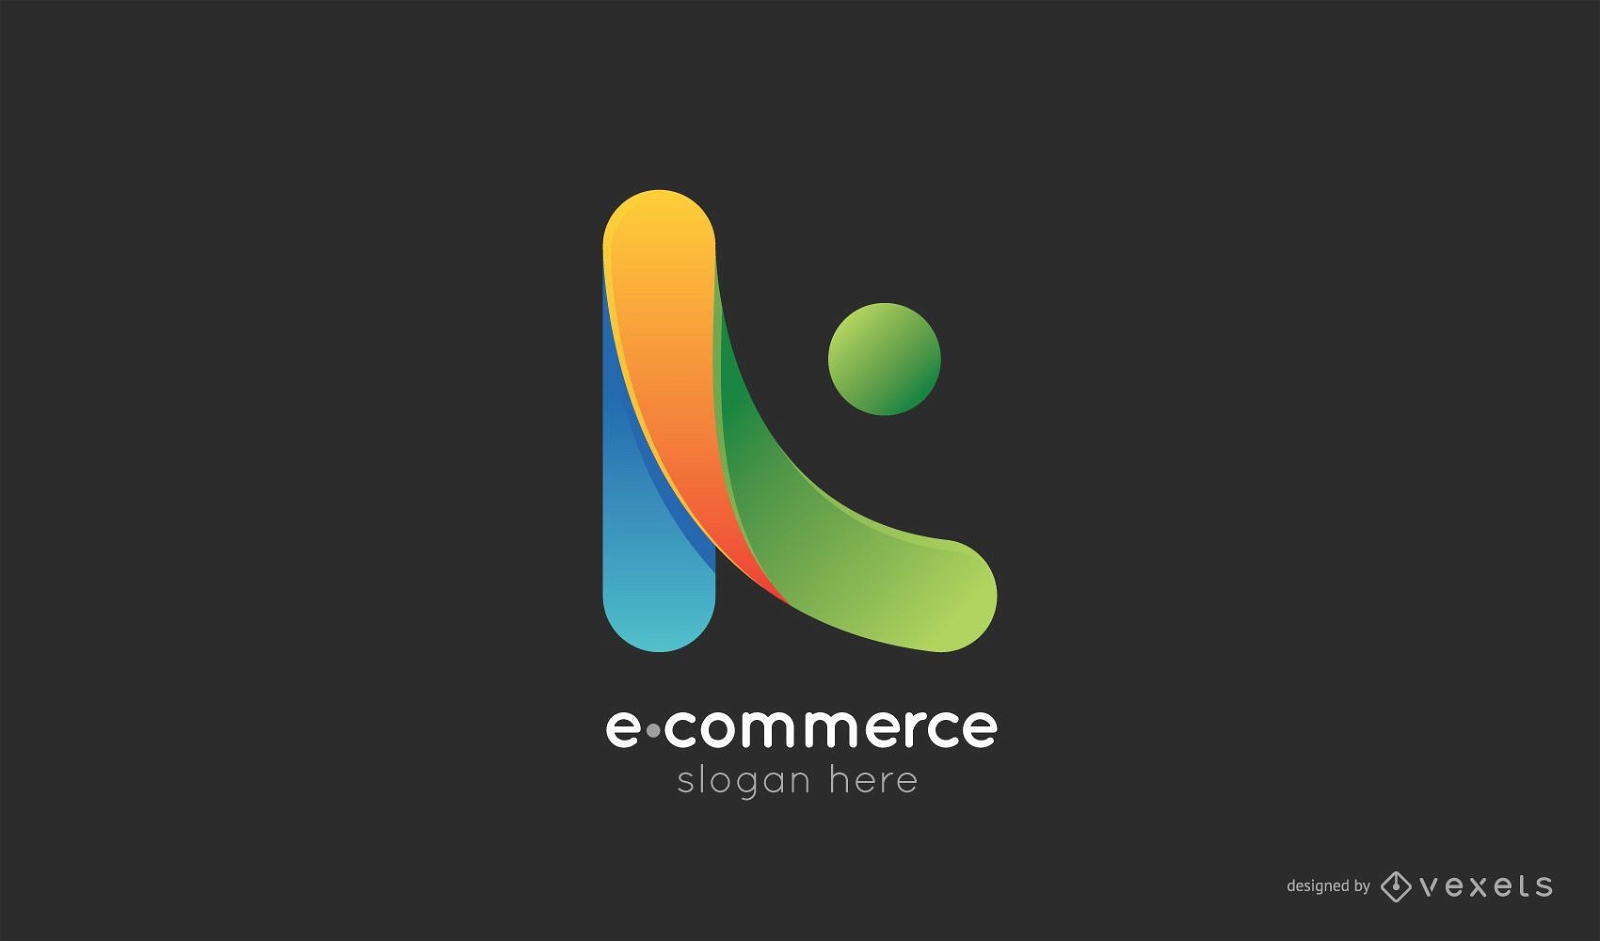 E-commerce logo template